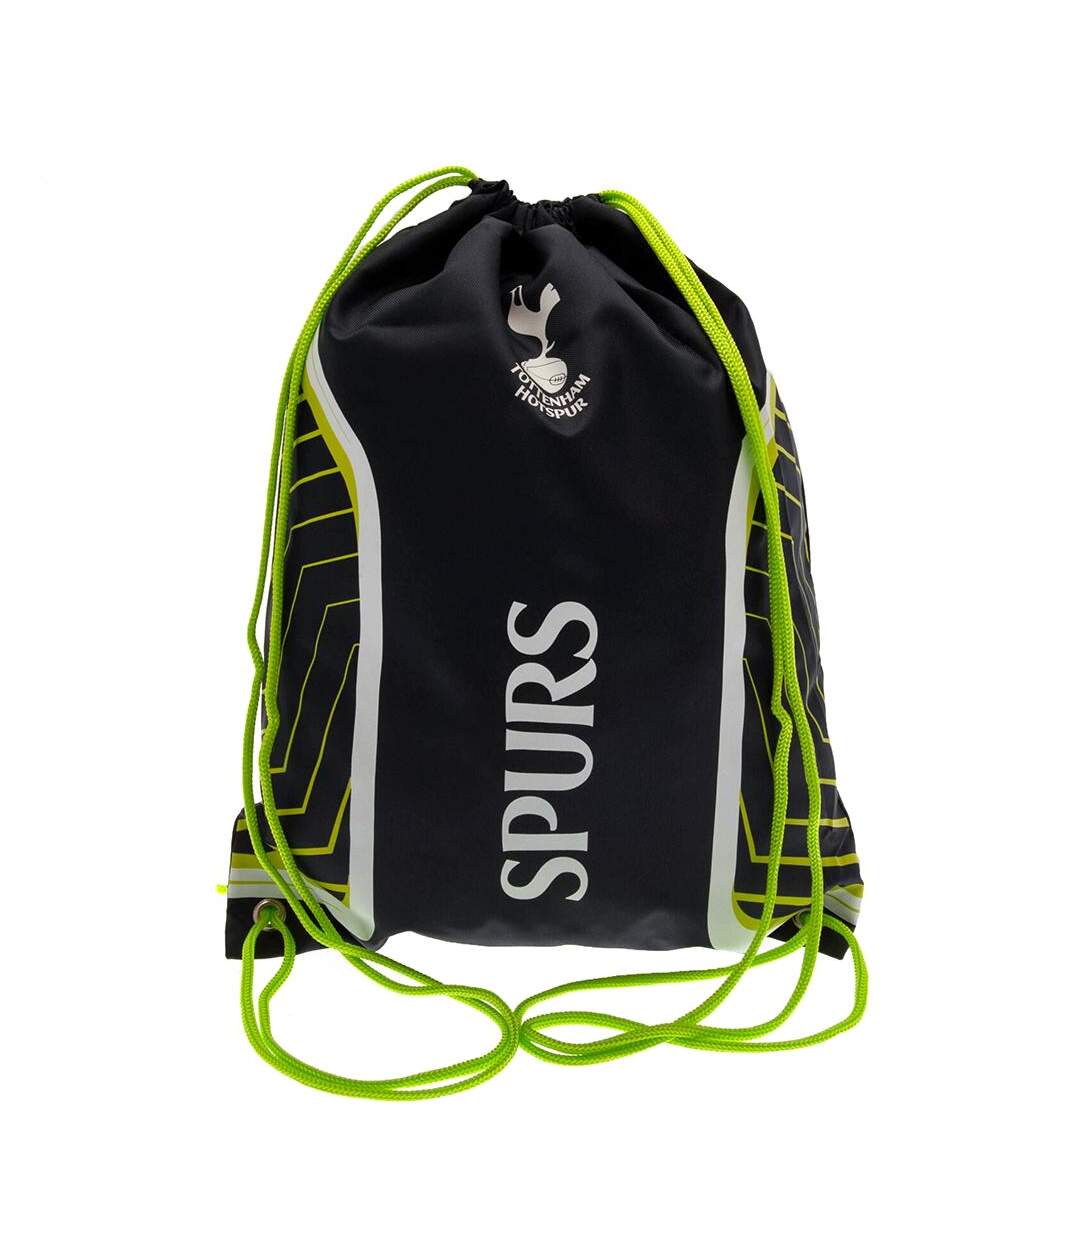 Tottenham Hotspur FC Flash Drawstring Bag (Black/Green/White) (One Size)